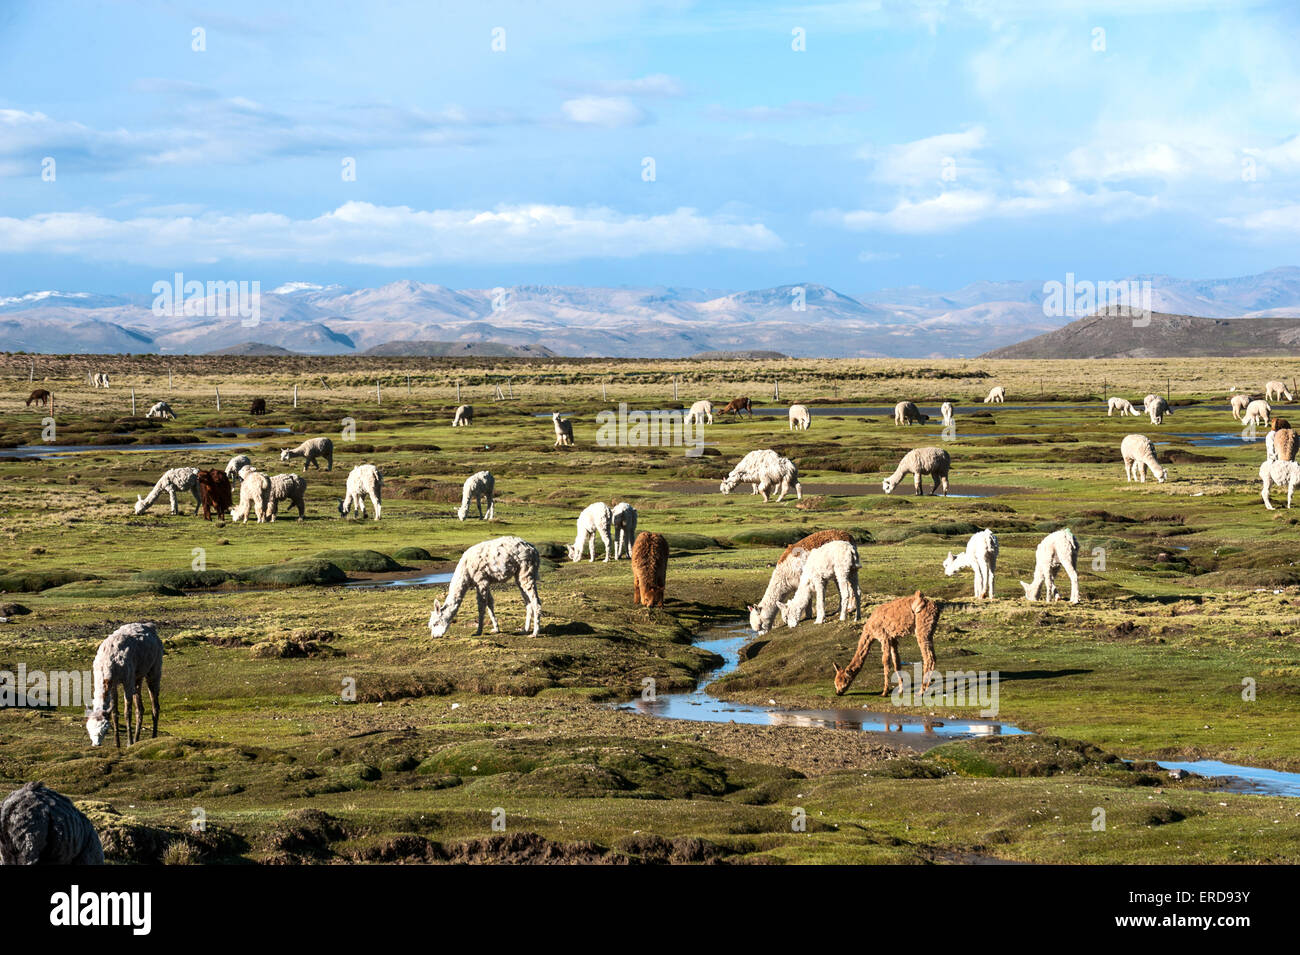 Llamas and alpacas graze in the mountains near Arequipa, Peru Stock Photo